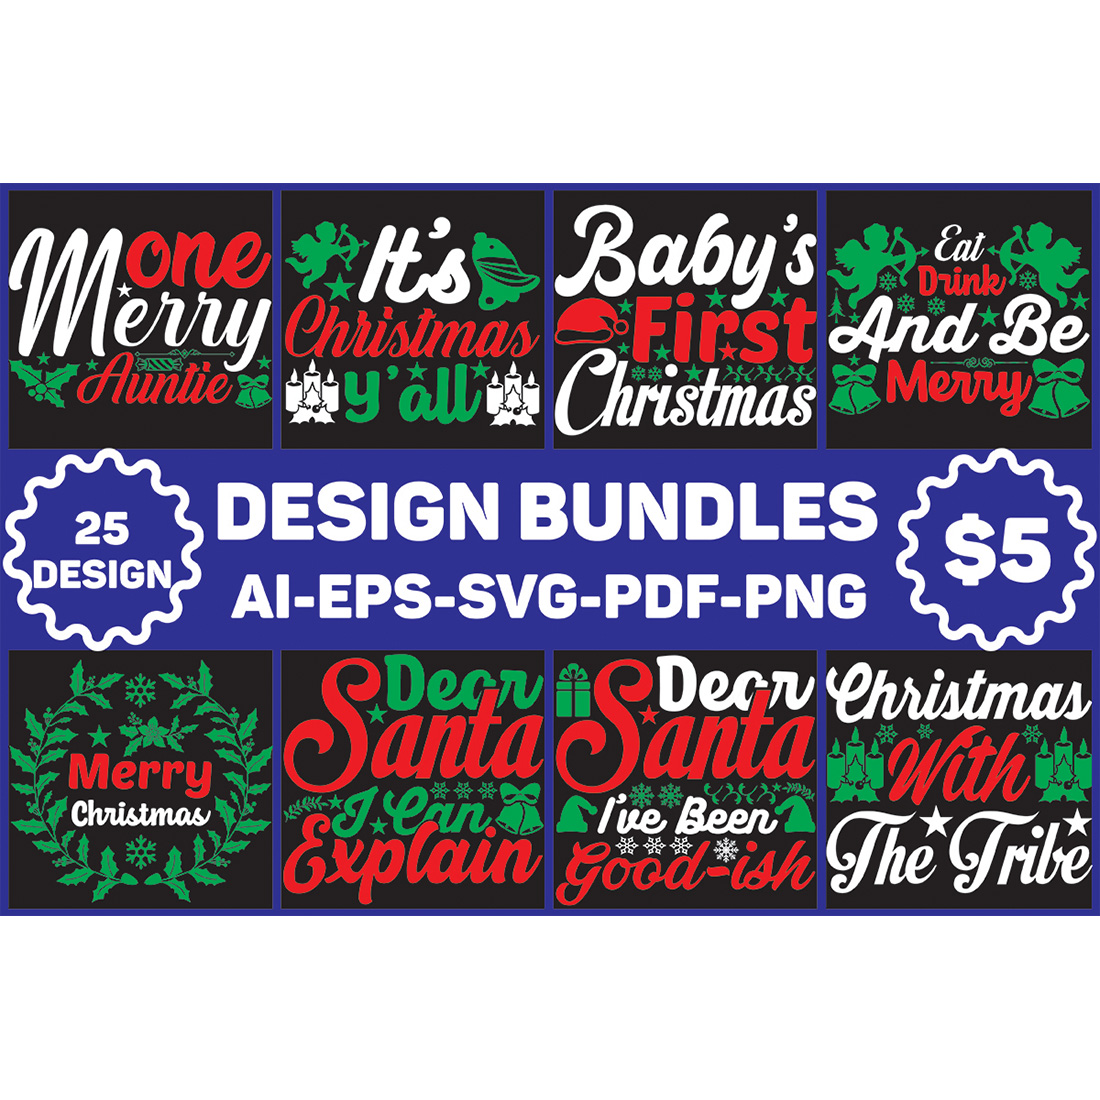 Christmas SVG Designs Bundle cover image.